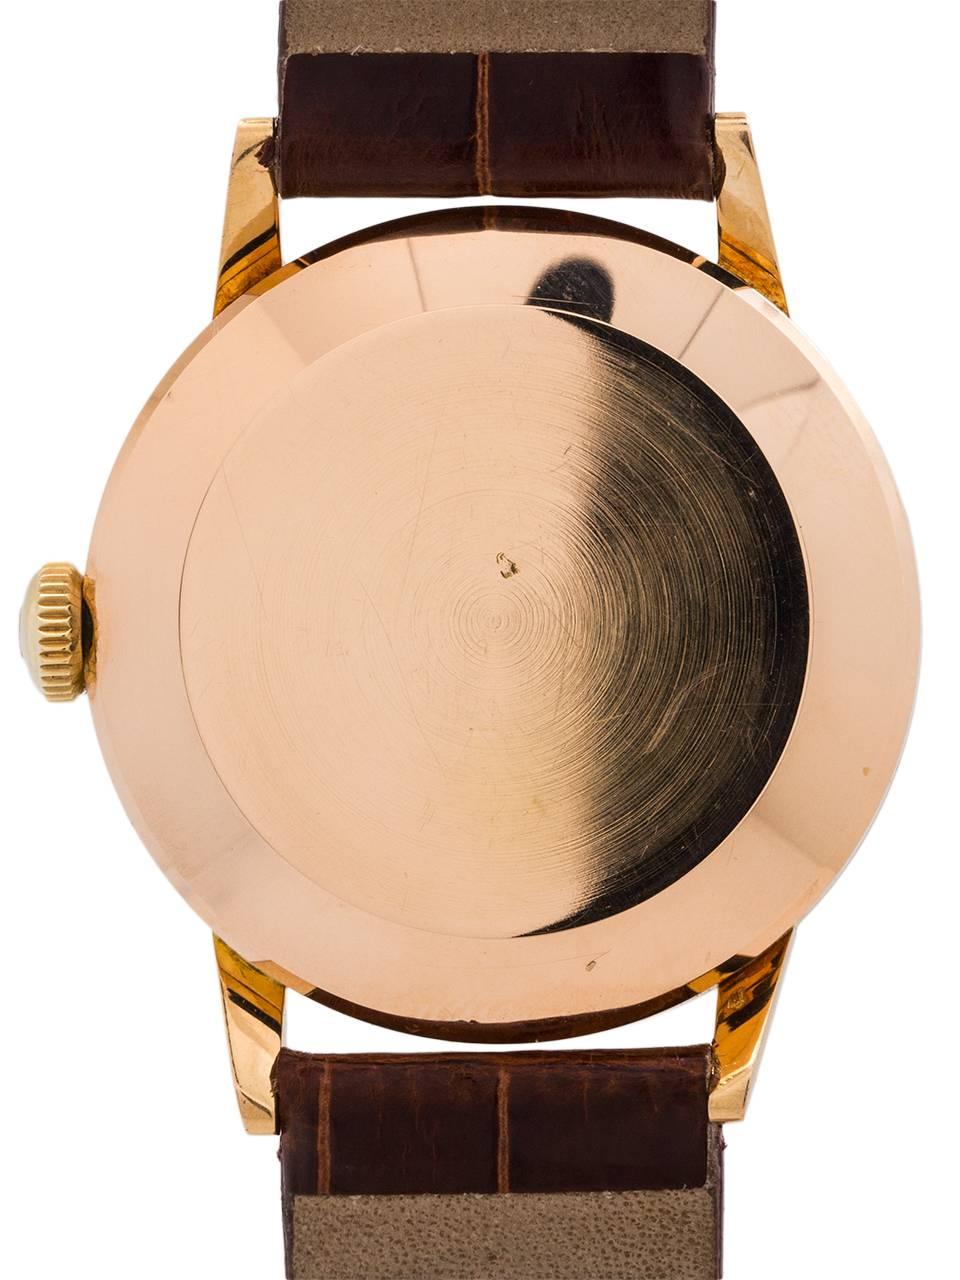 Men's Omega Rose Gold Dress Model manual wind wristwatch, circa 1956